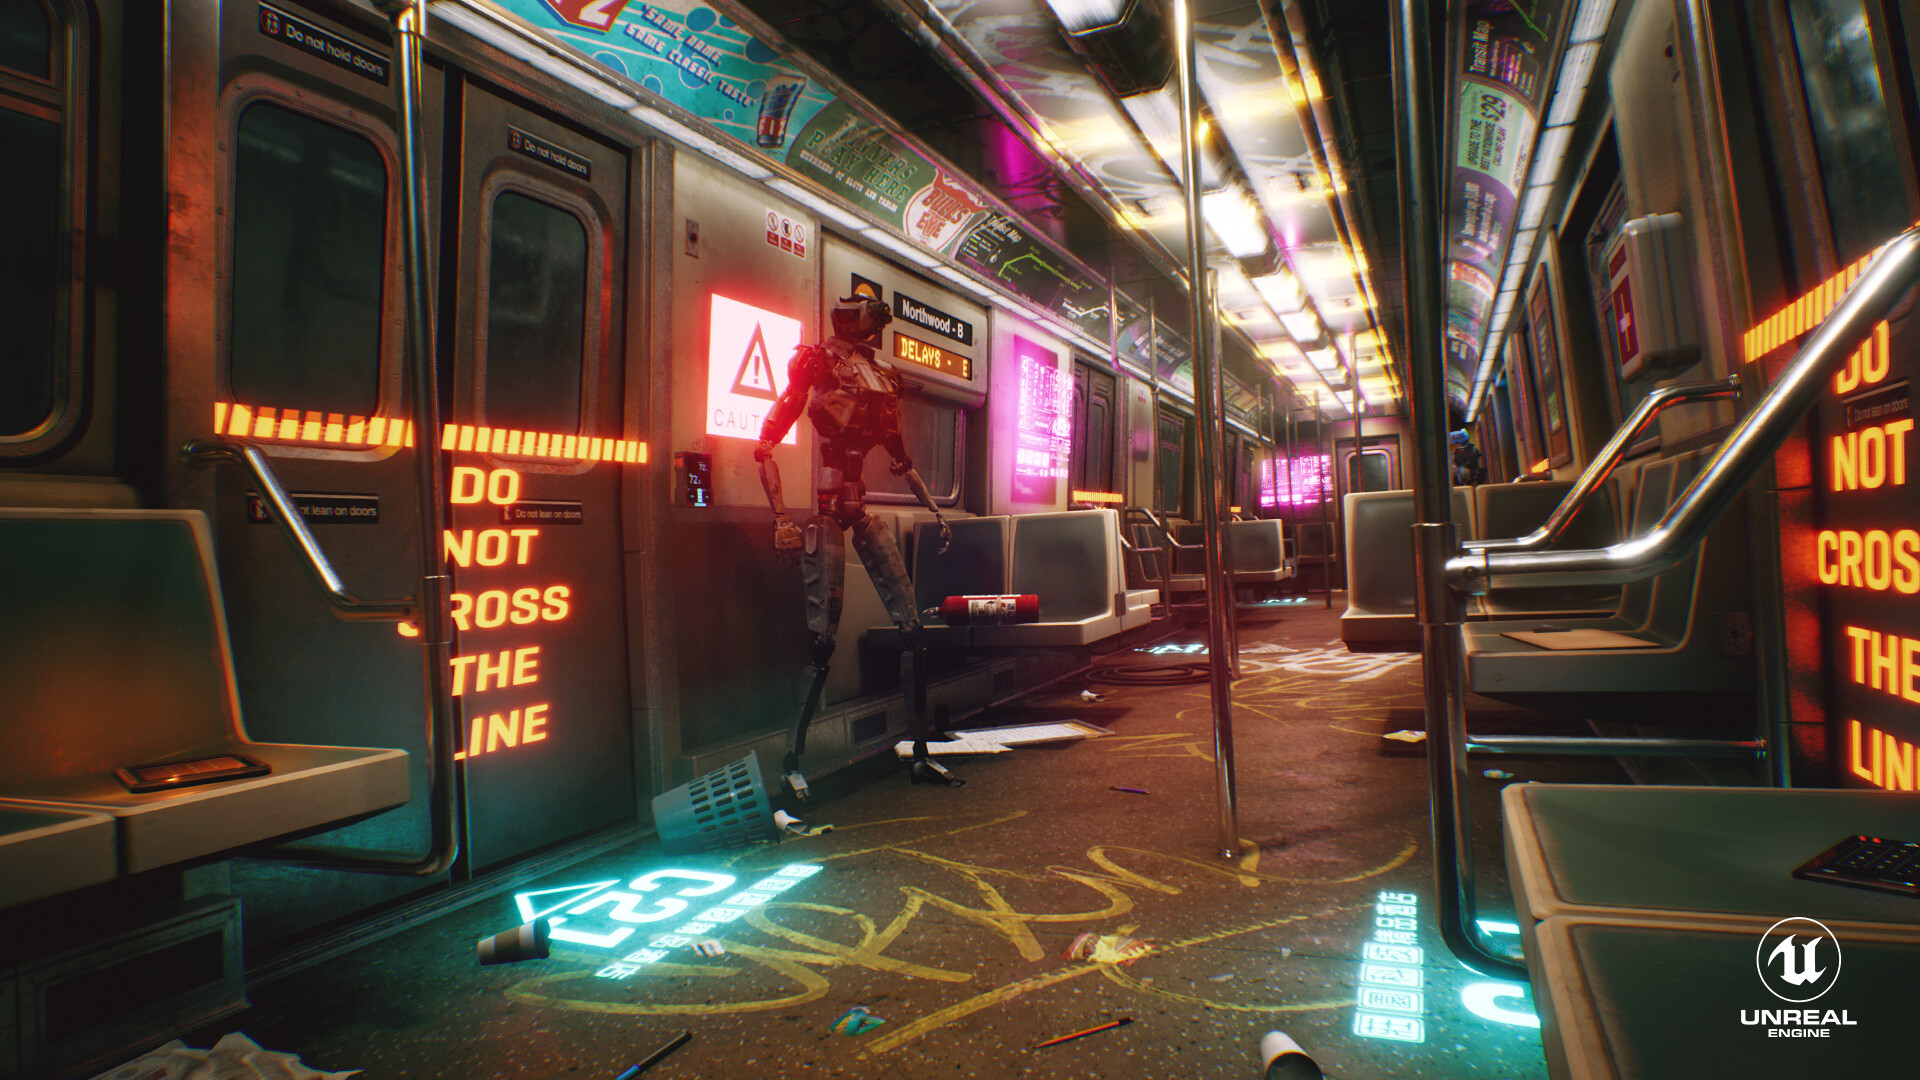 Young metro future. Метро в киберпанк 2077. Cyberpunk Subway. Внутри маглева киберпанк. Мотель киберпанк.